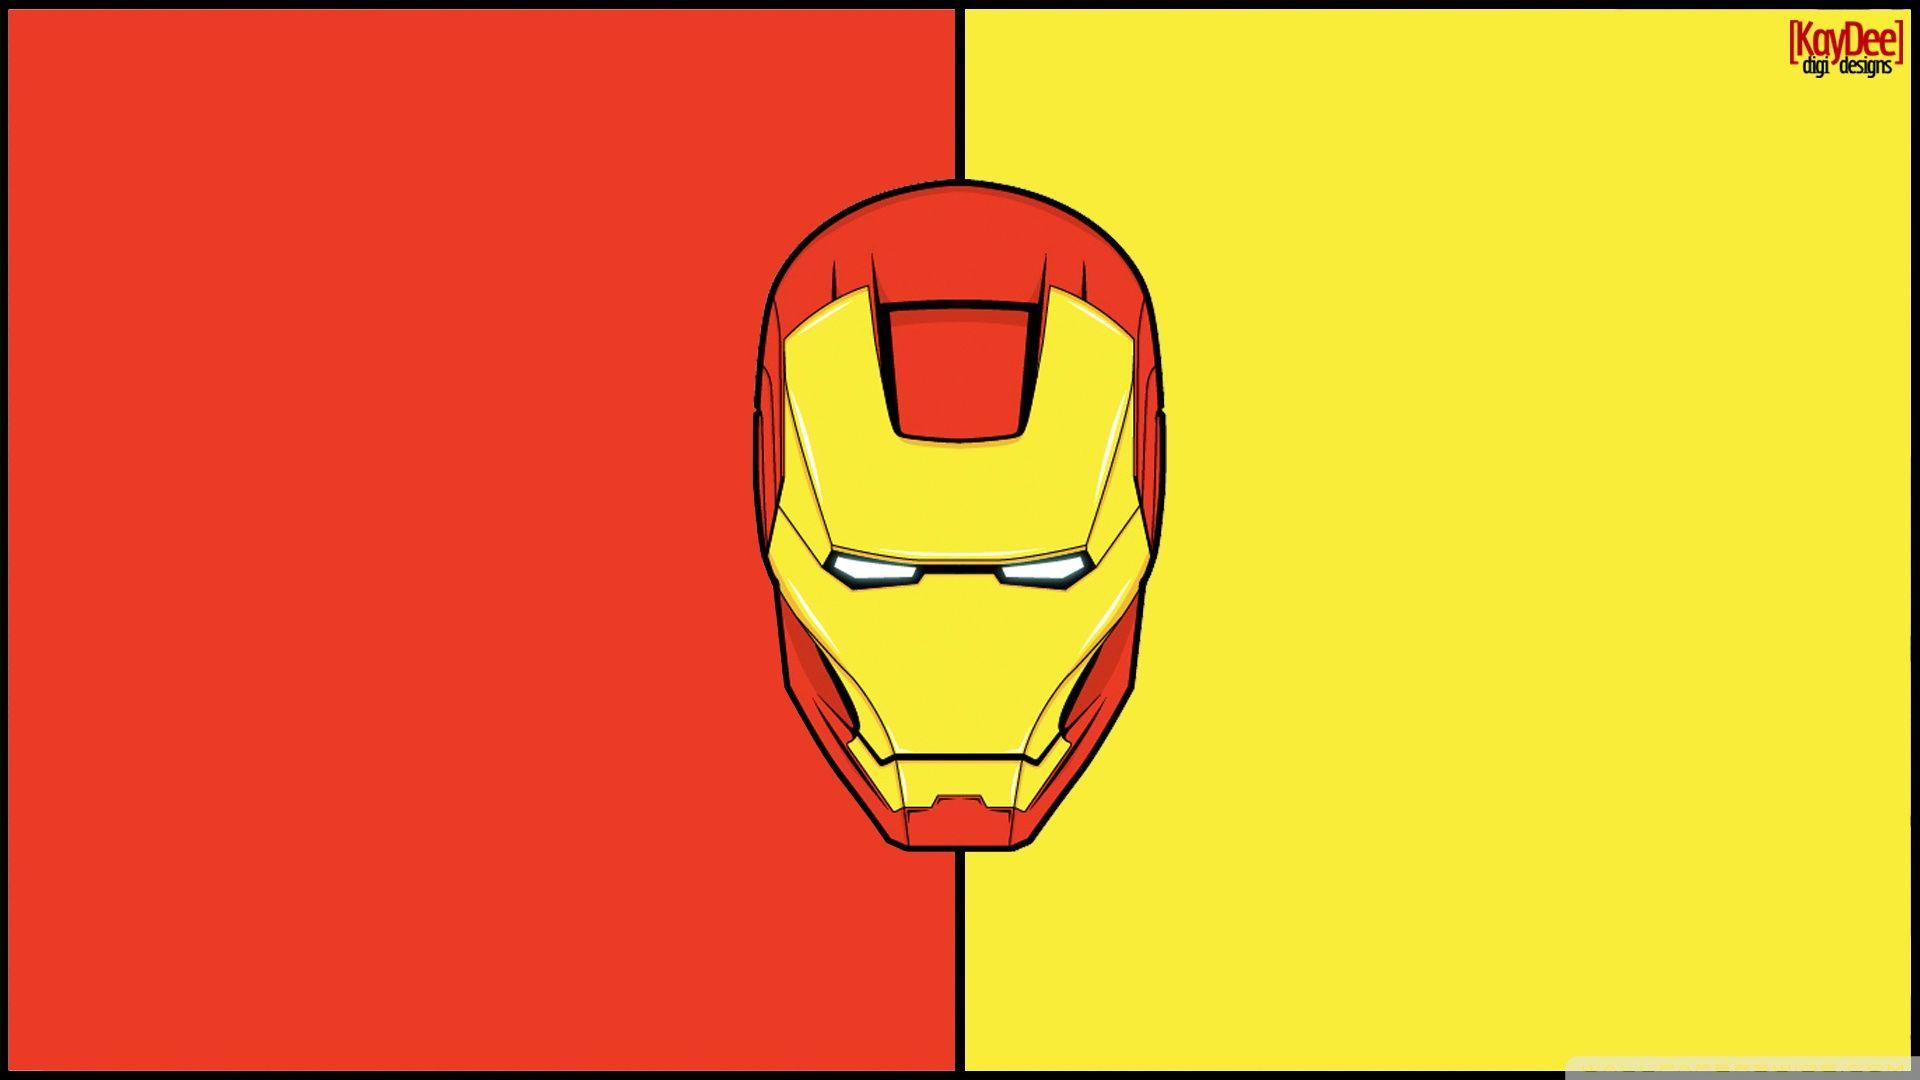 1920x1080 Iron Man Face hình nền, Hình ảnh